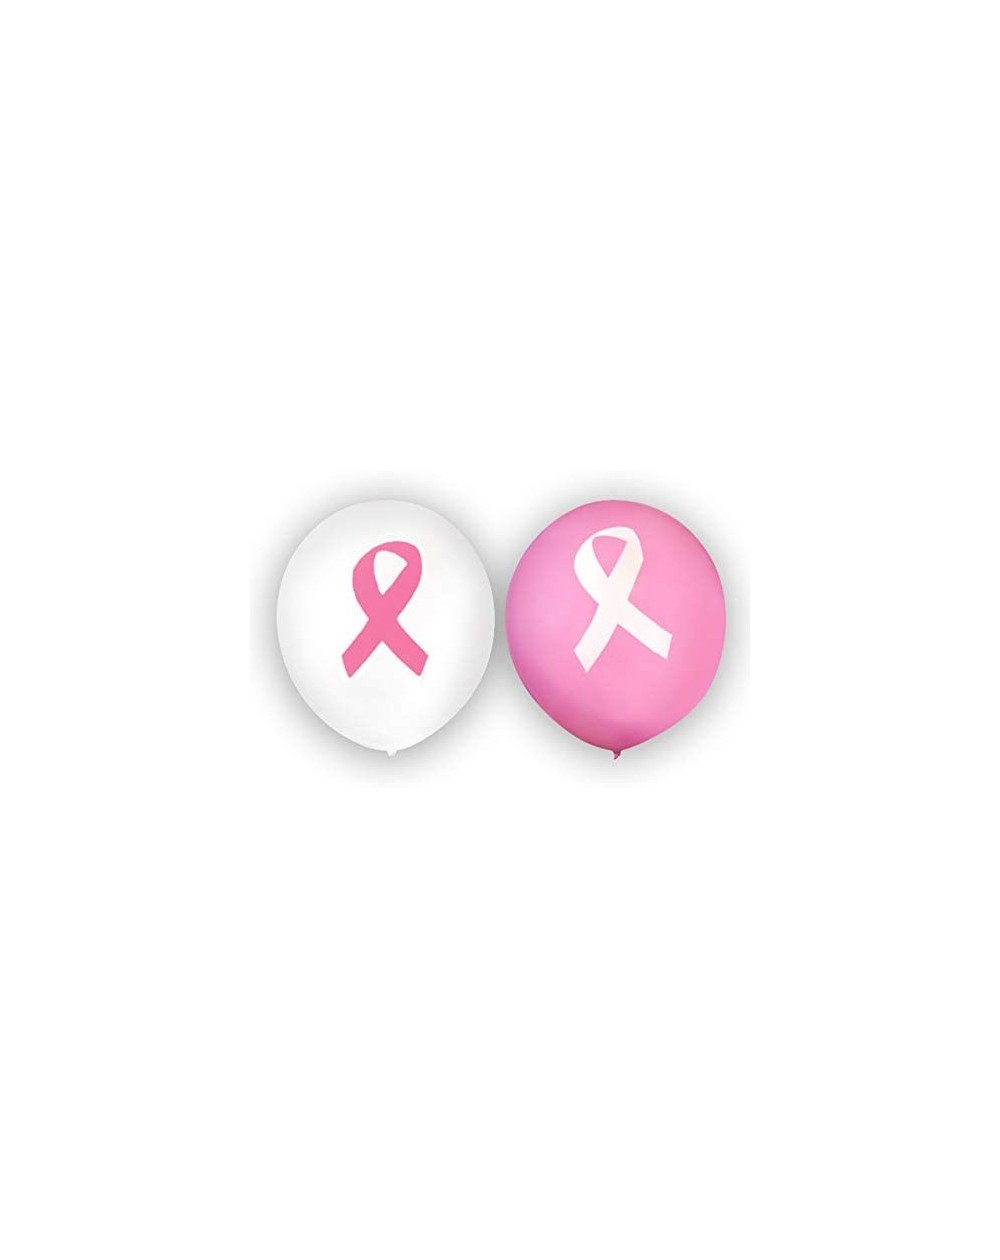 Balloons Breast Cancer Pink Ribbon Balloons - Pink Ribbon Balloon for Breast Cancer Awareness Fundraisers (25 Balloons - 2 Co...